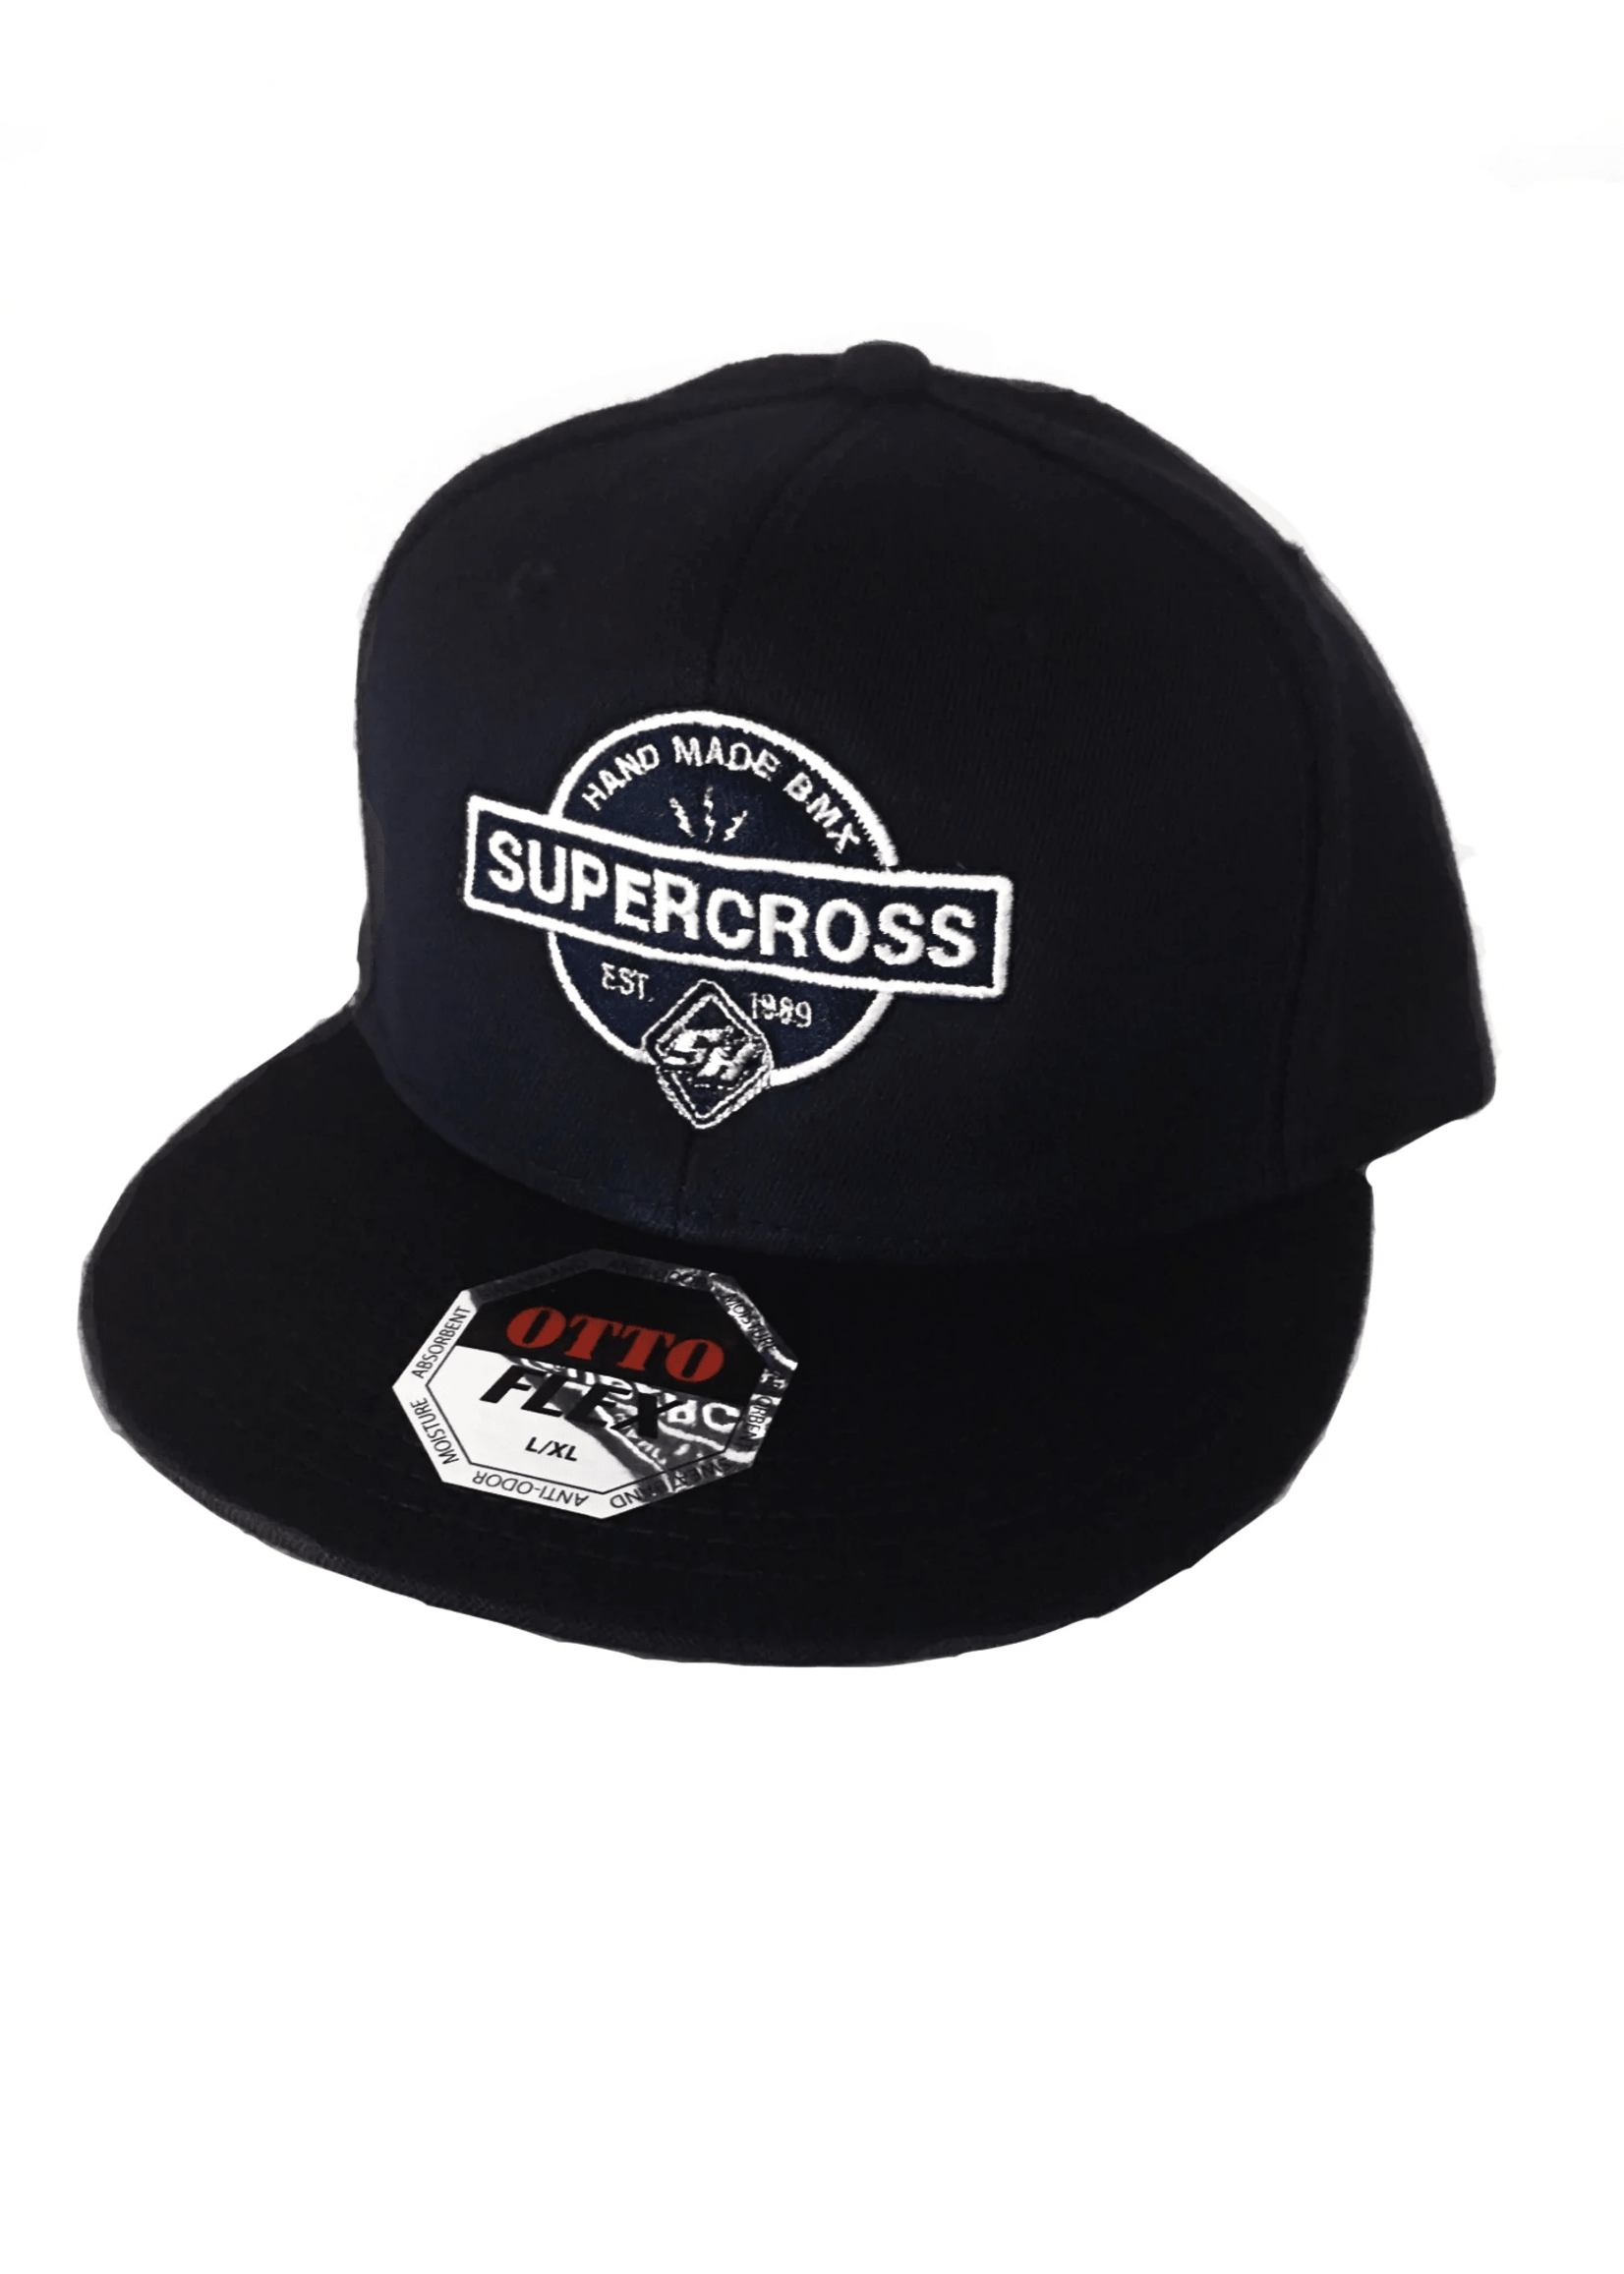 Supercross Hat Supercross Hand Made